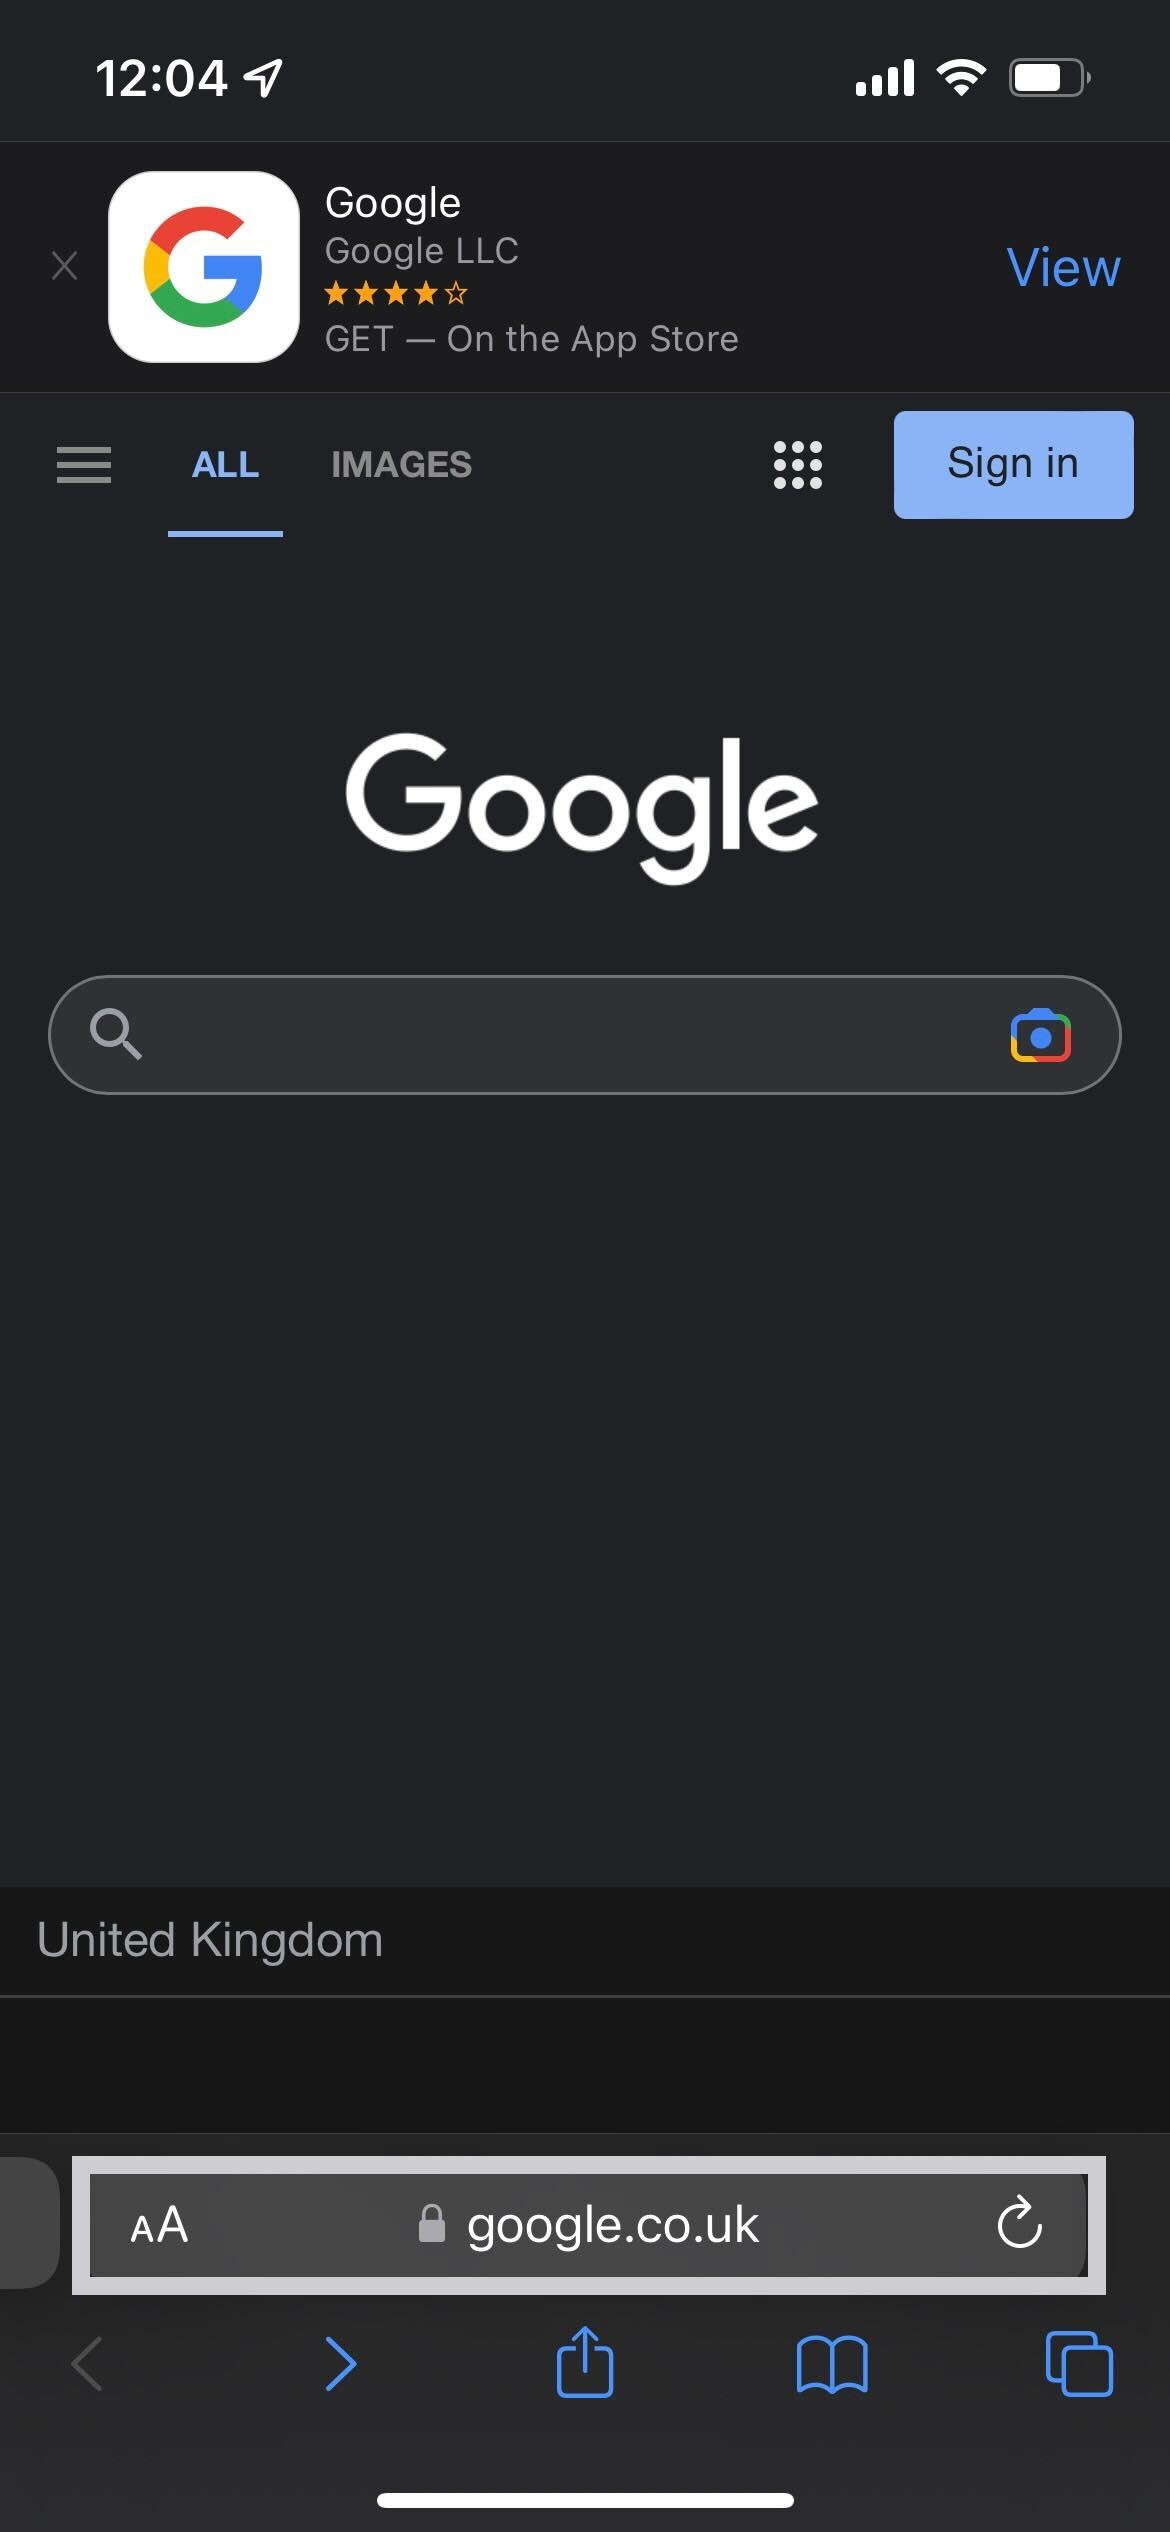 Google home screen on iOS